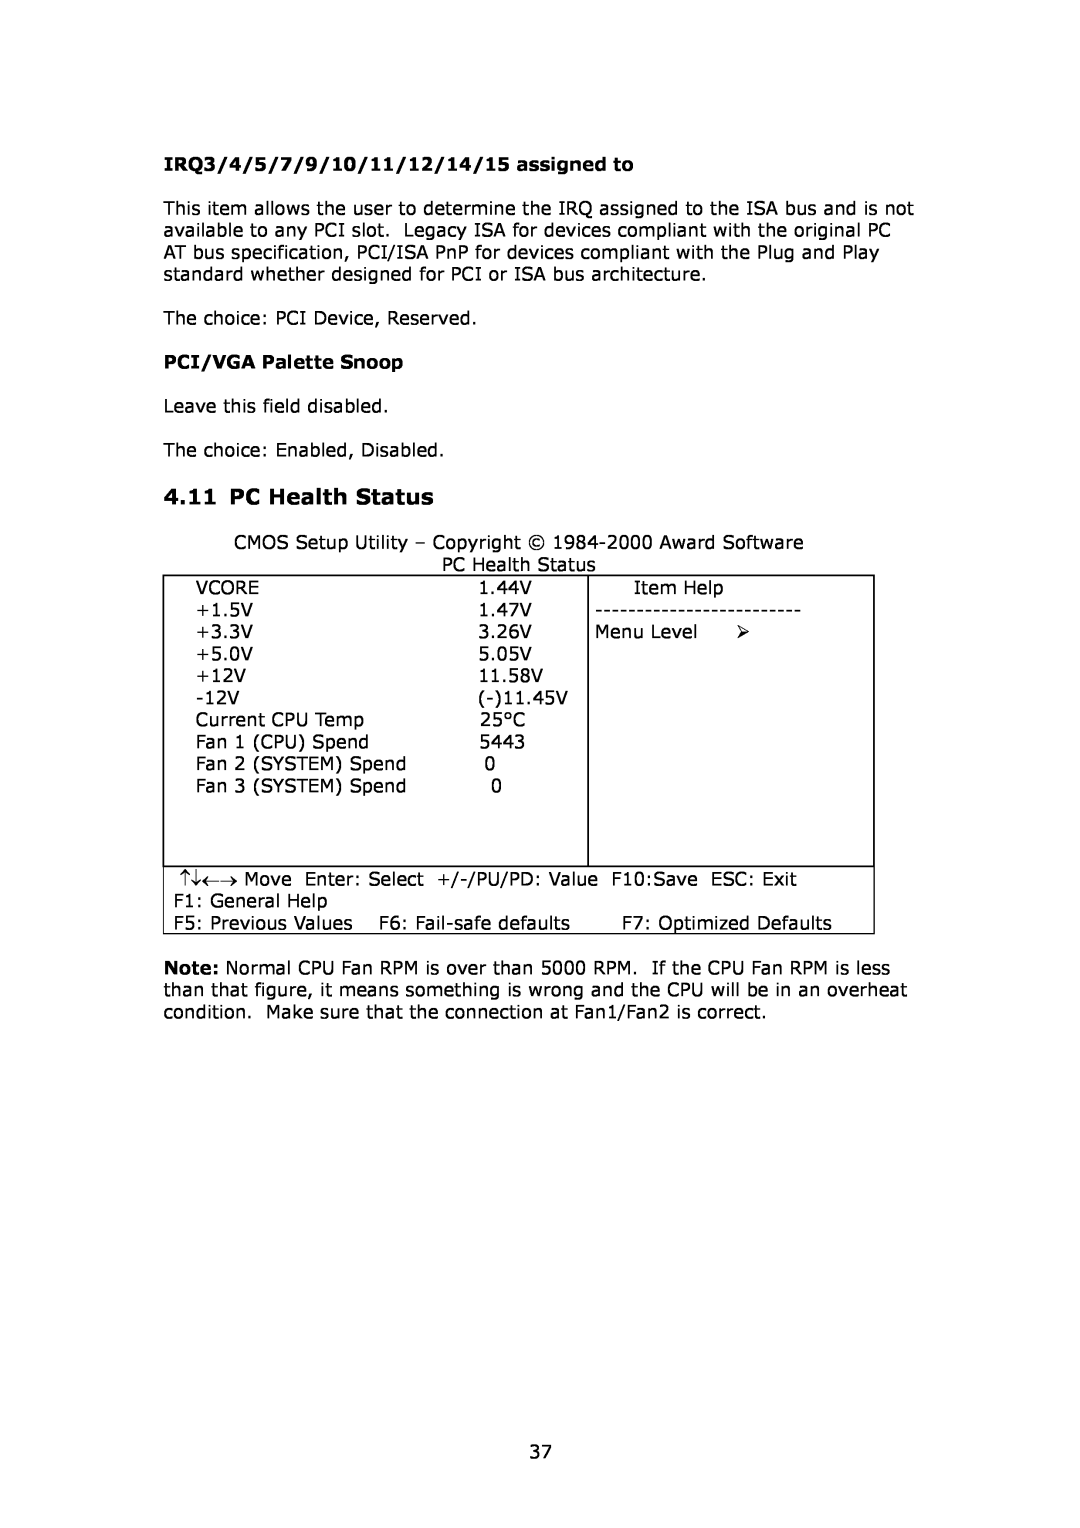 IBM SAGP-845EV user manual PC Health Status, IRQ3/4/5/7/9/10/11/12/14/15 assigned to, PCI/VGA Palette Snoop 